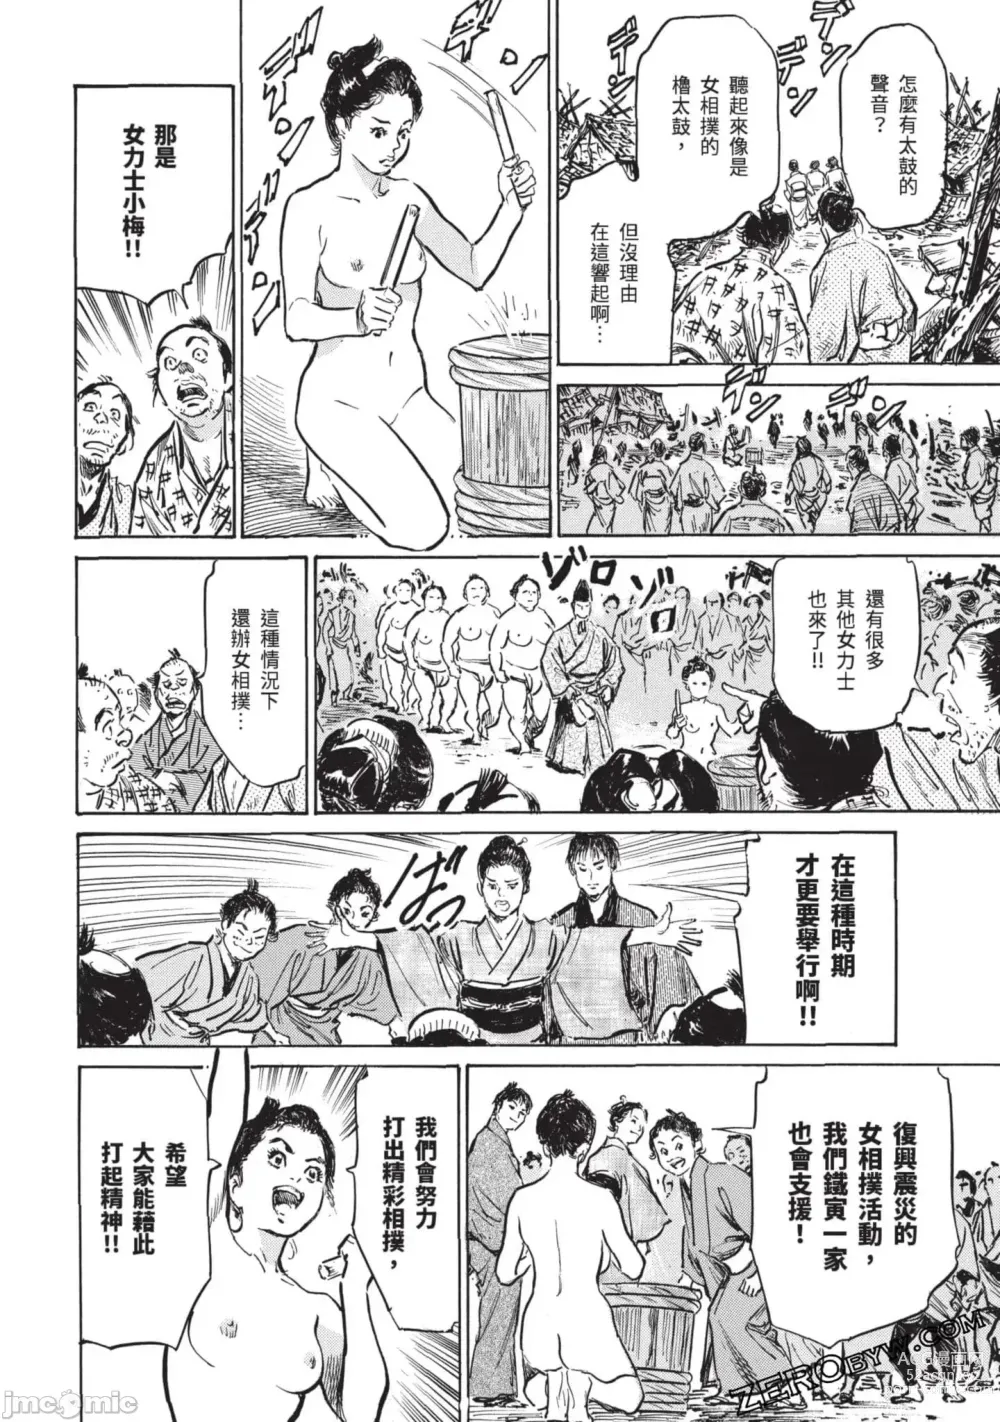 Page 147 of manga Inshuu Hiroku Midare Mandara 3